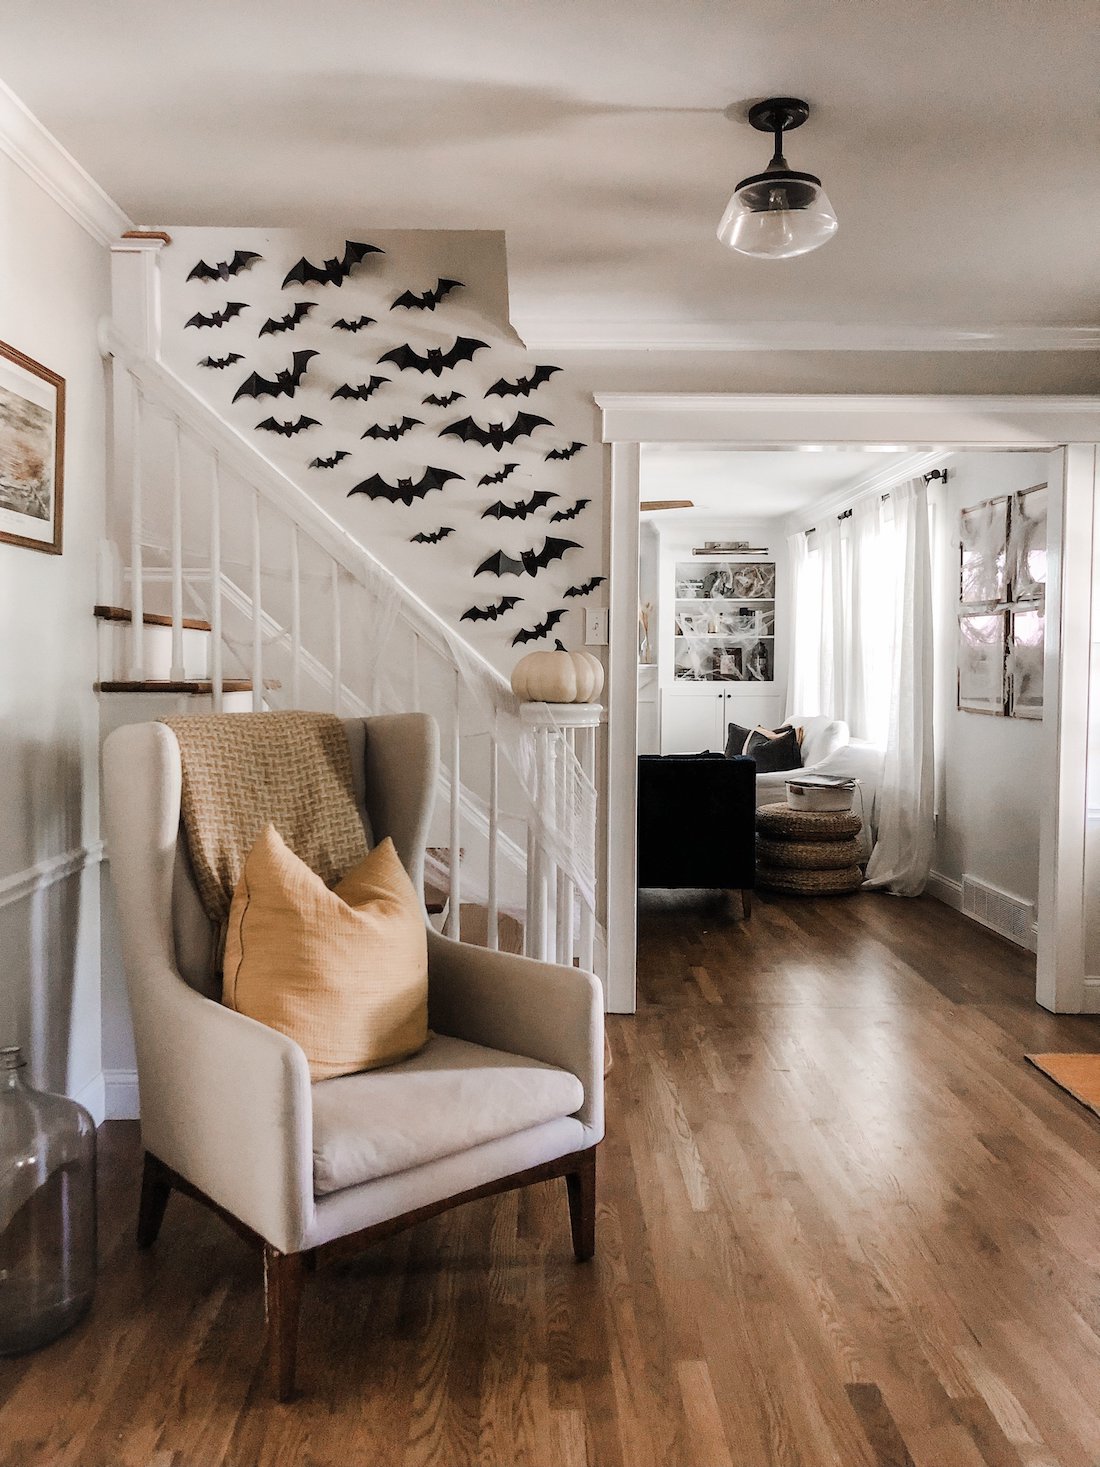 indoor bat decor _ Halloween home styling guide